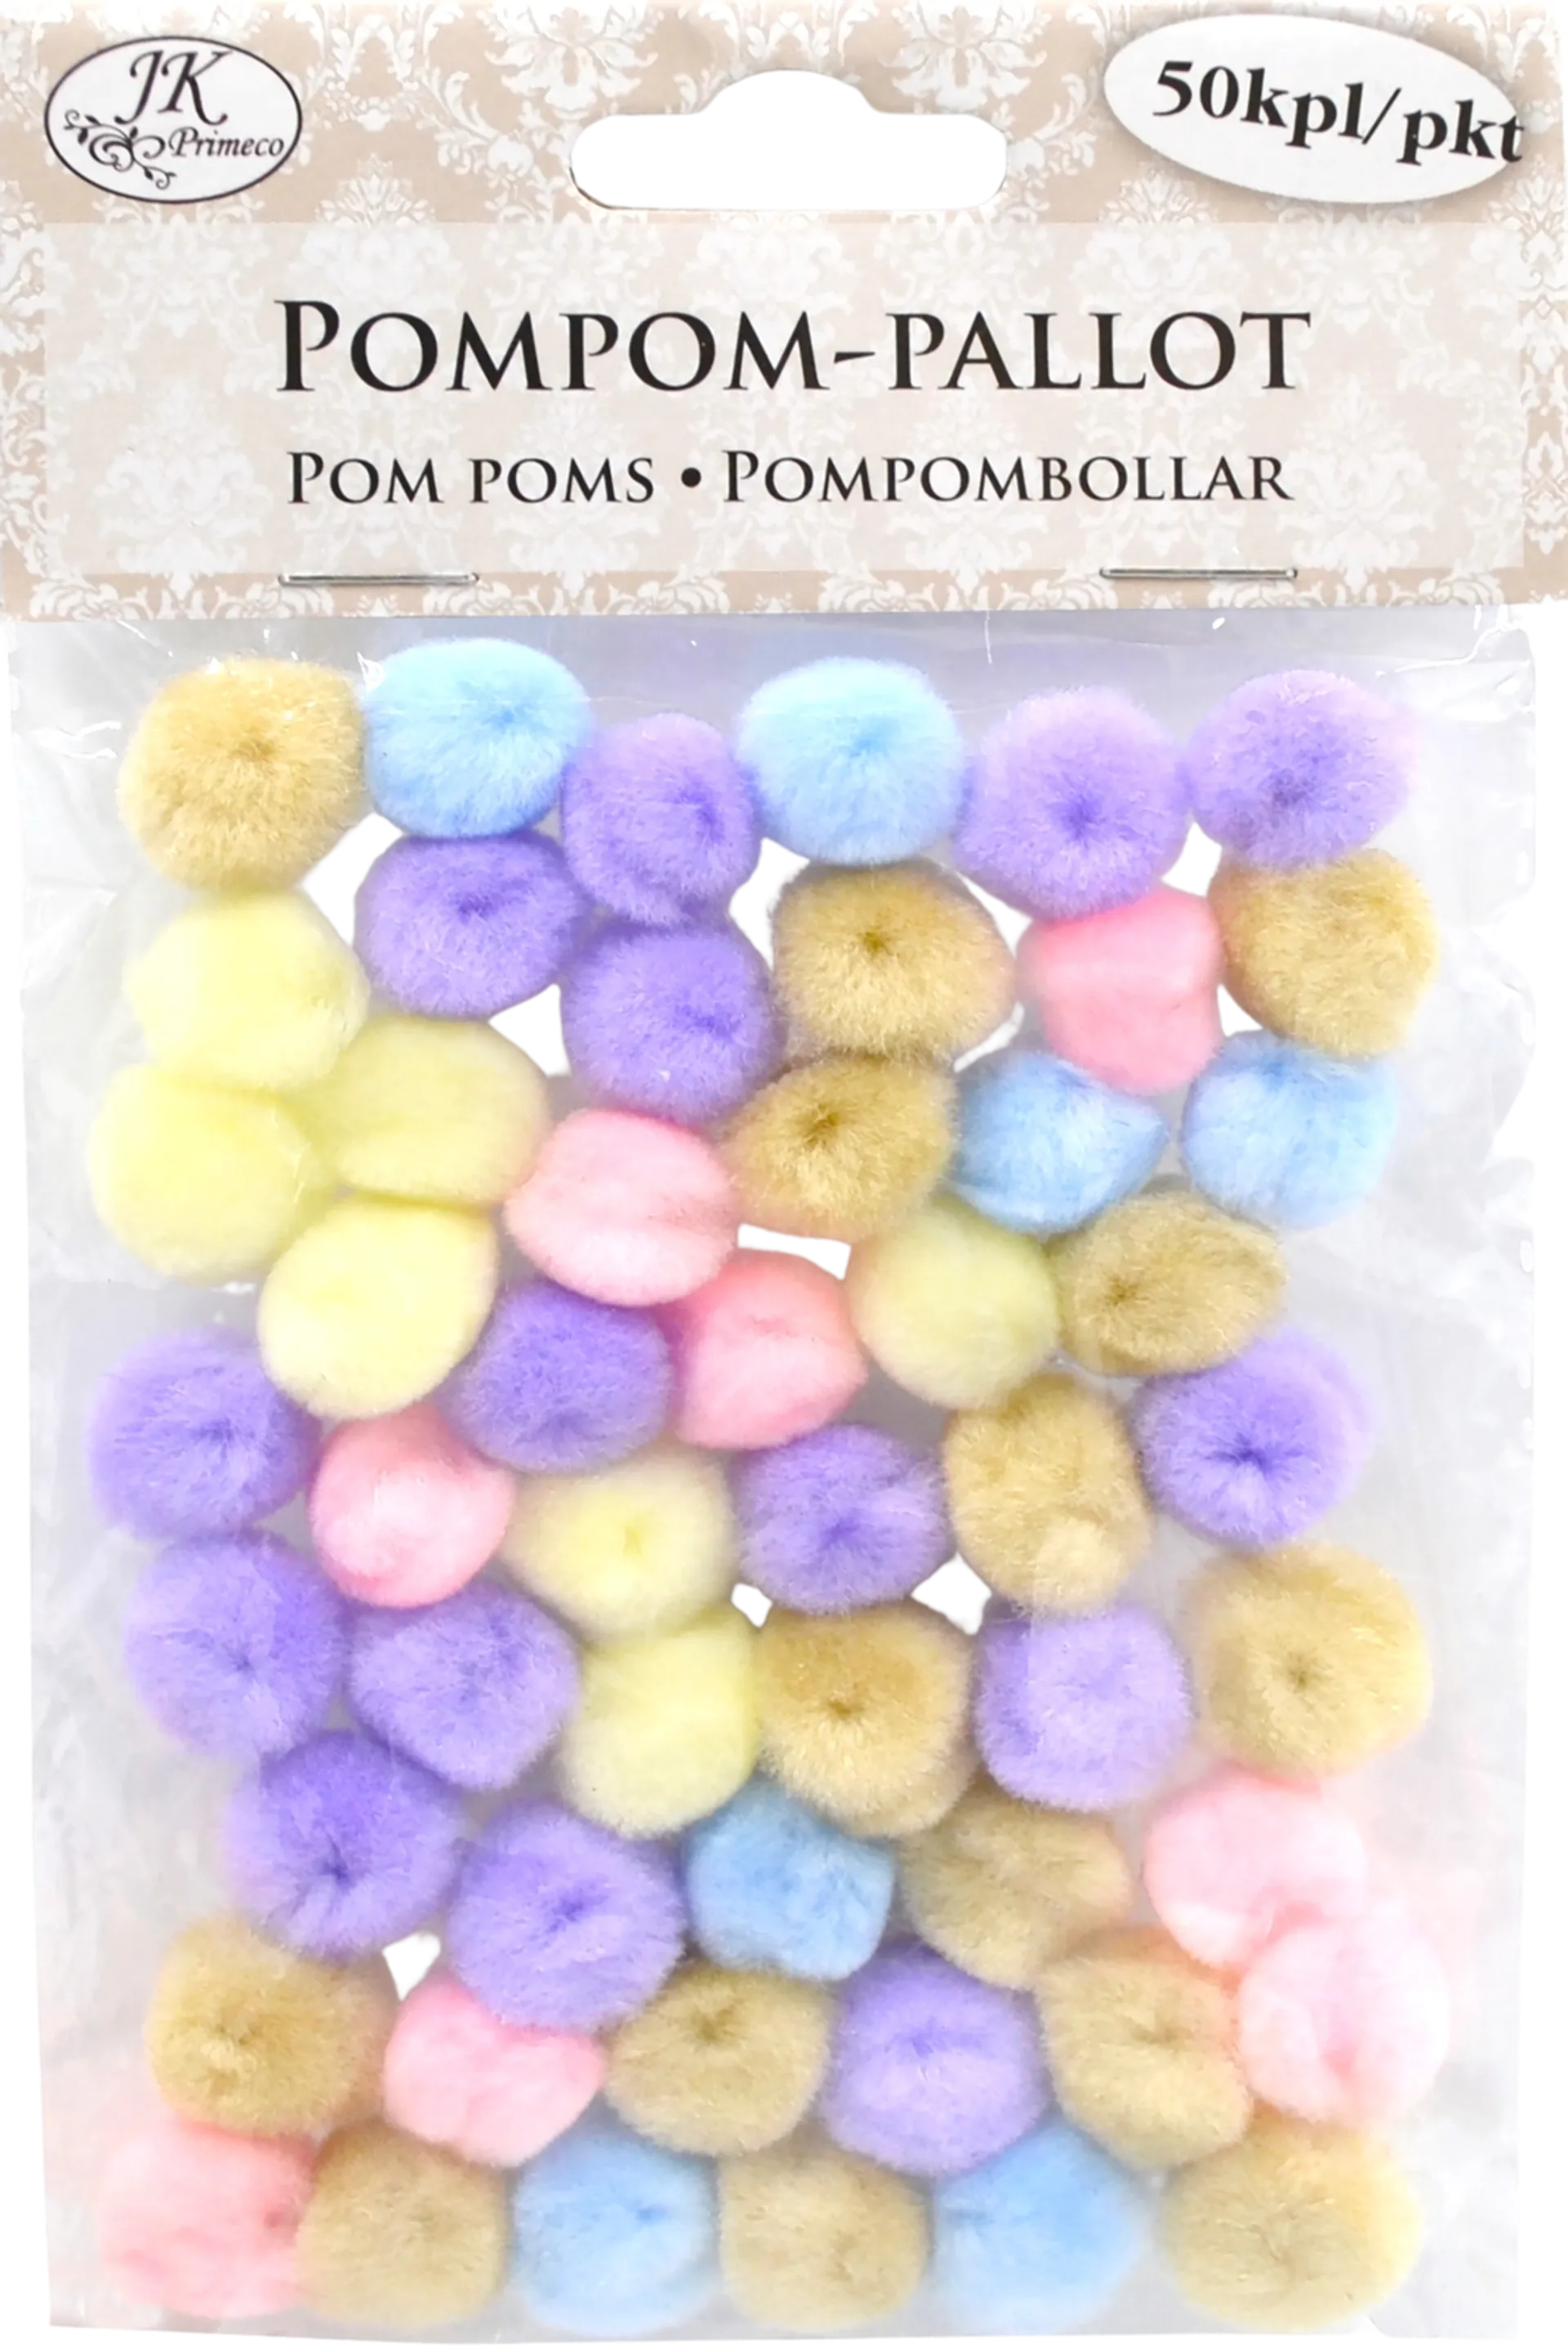 J.K. Primeco pompom-pallot pastelli 50kpl